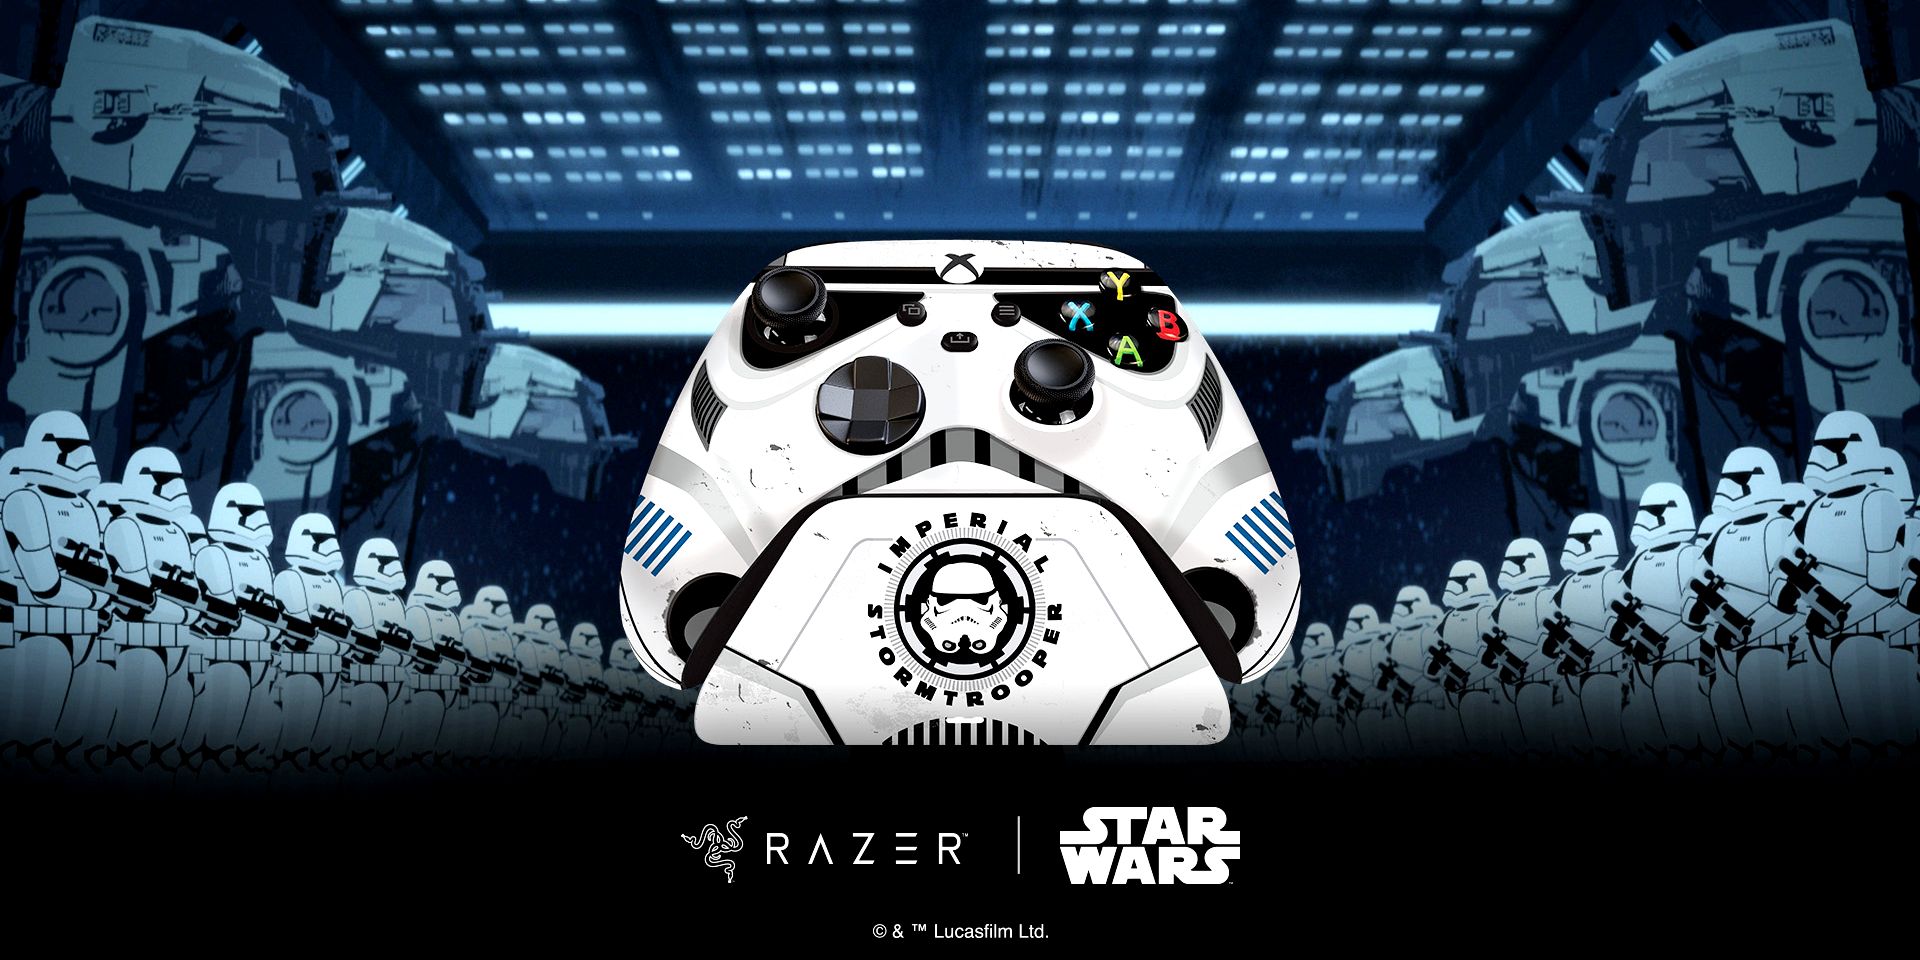 Stormtrooper xbox controller